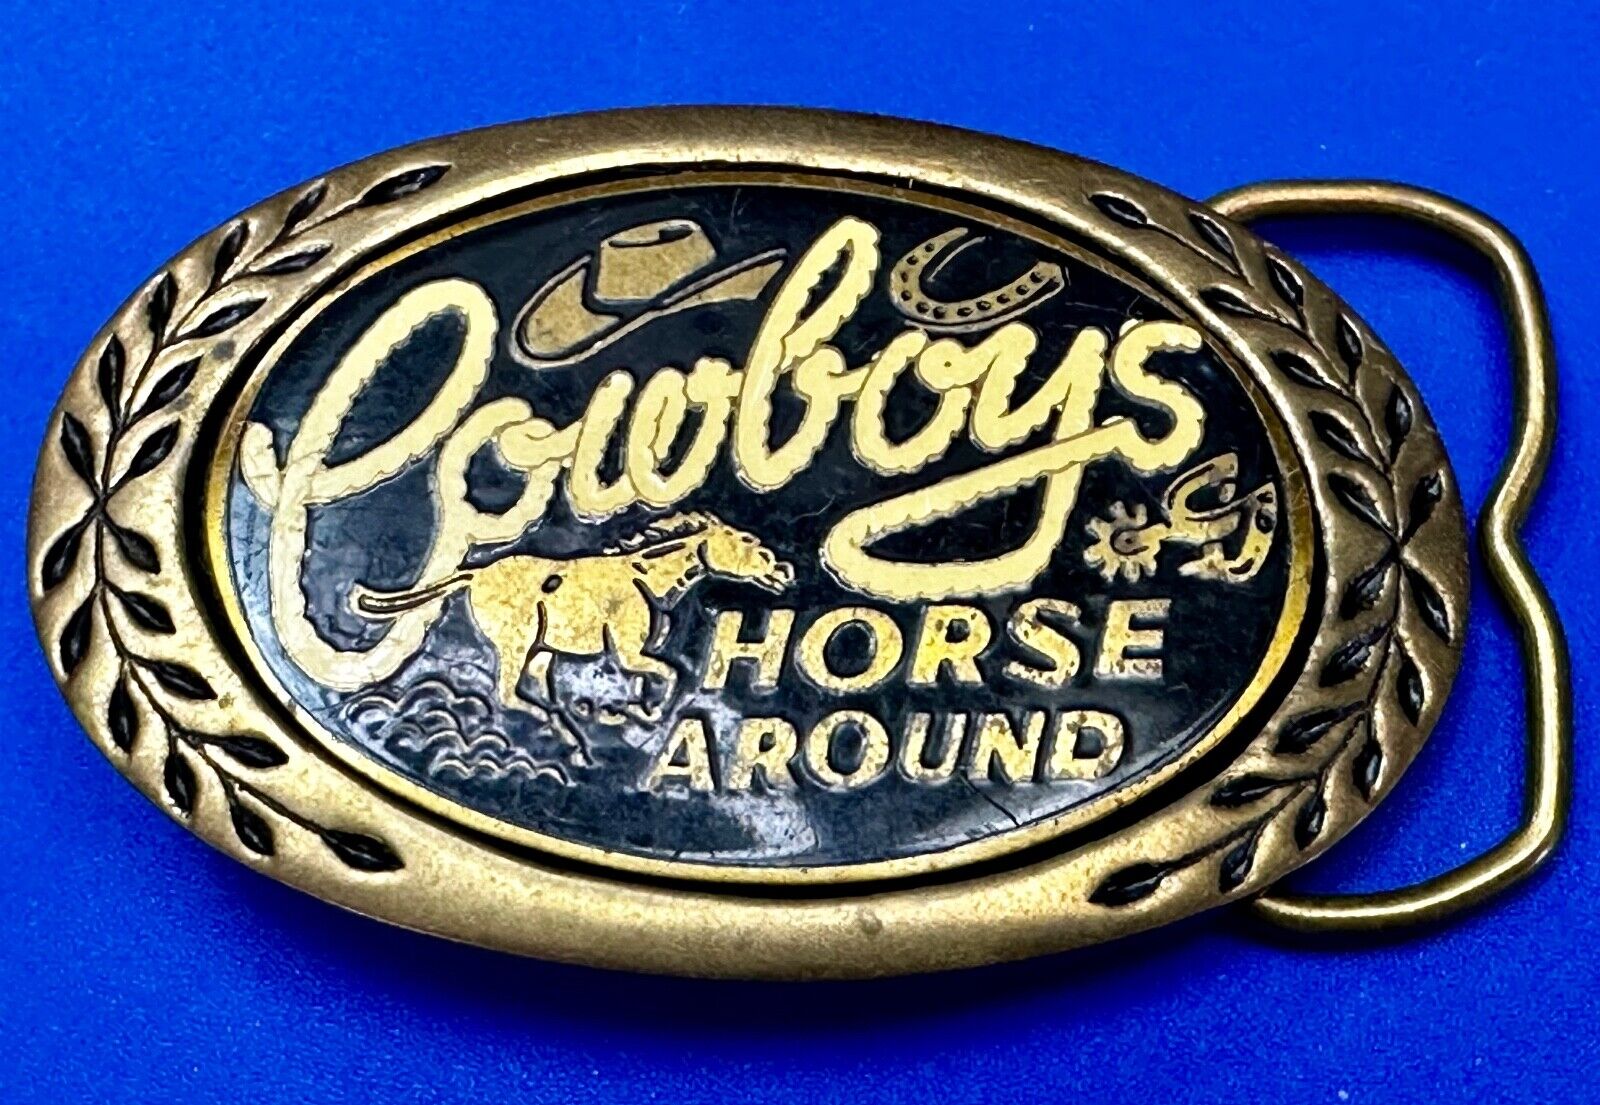 Cowboys Horse Around - Vintage Oval Solid Brass Belt Buckle